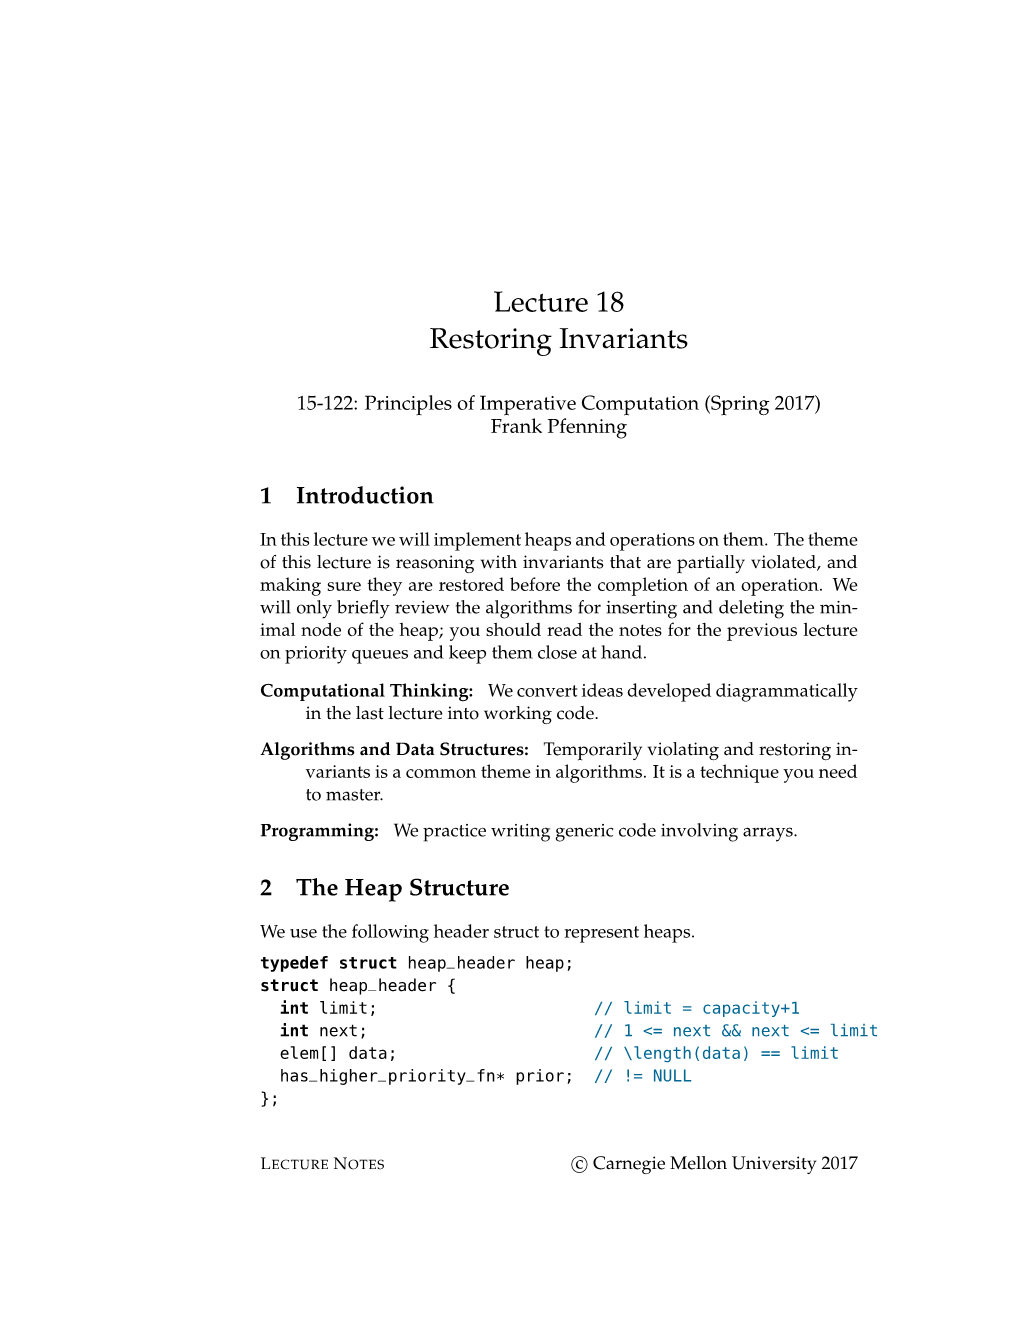 Lecture 18 Restoring Invariants